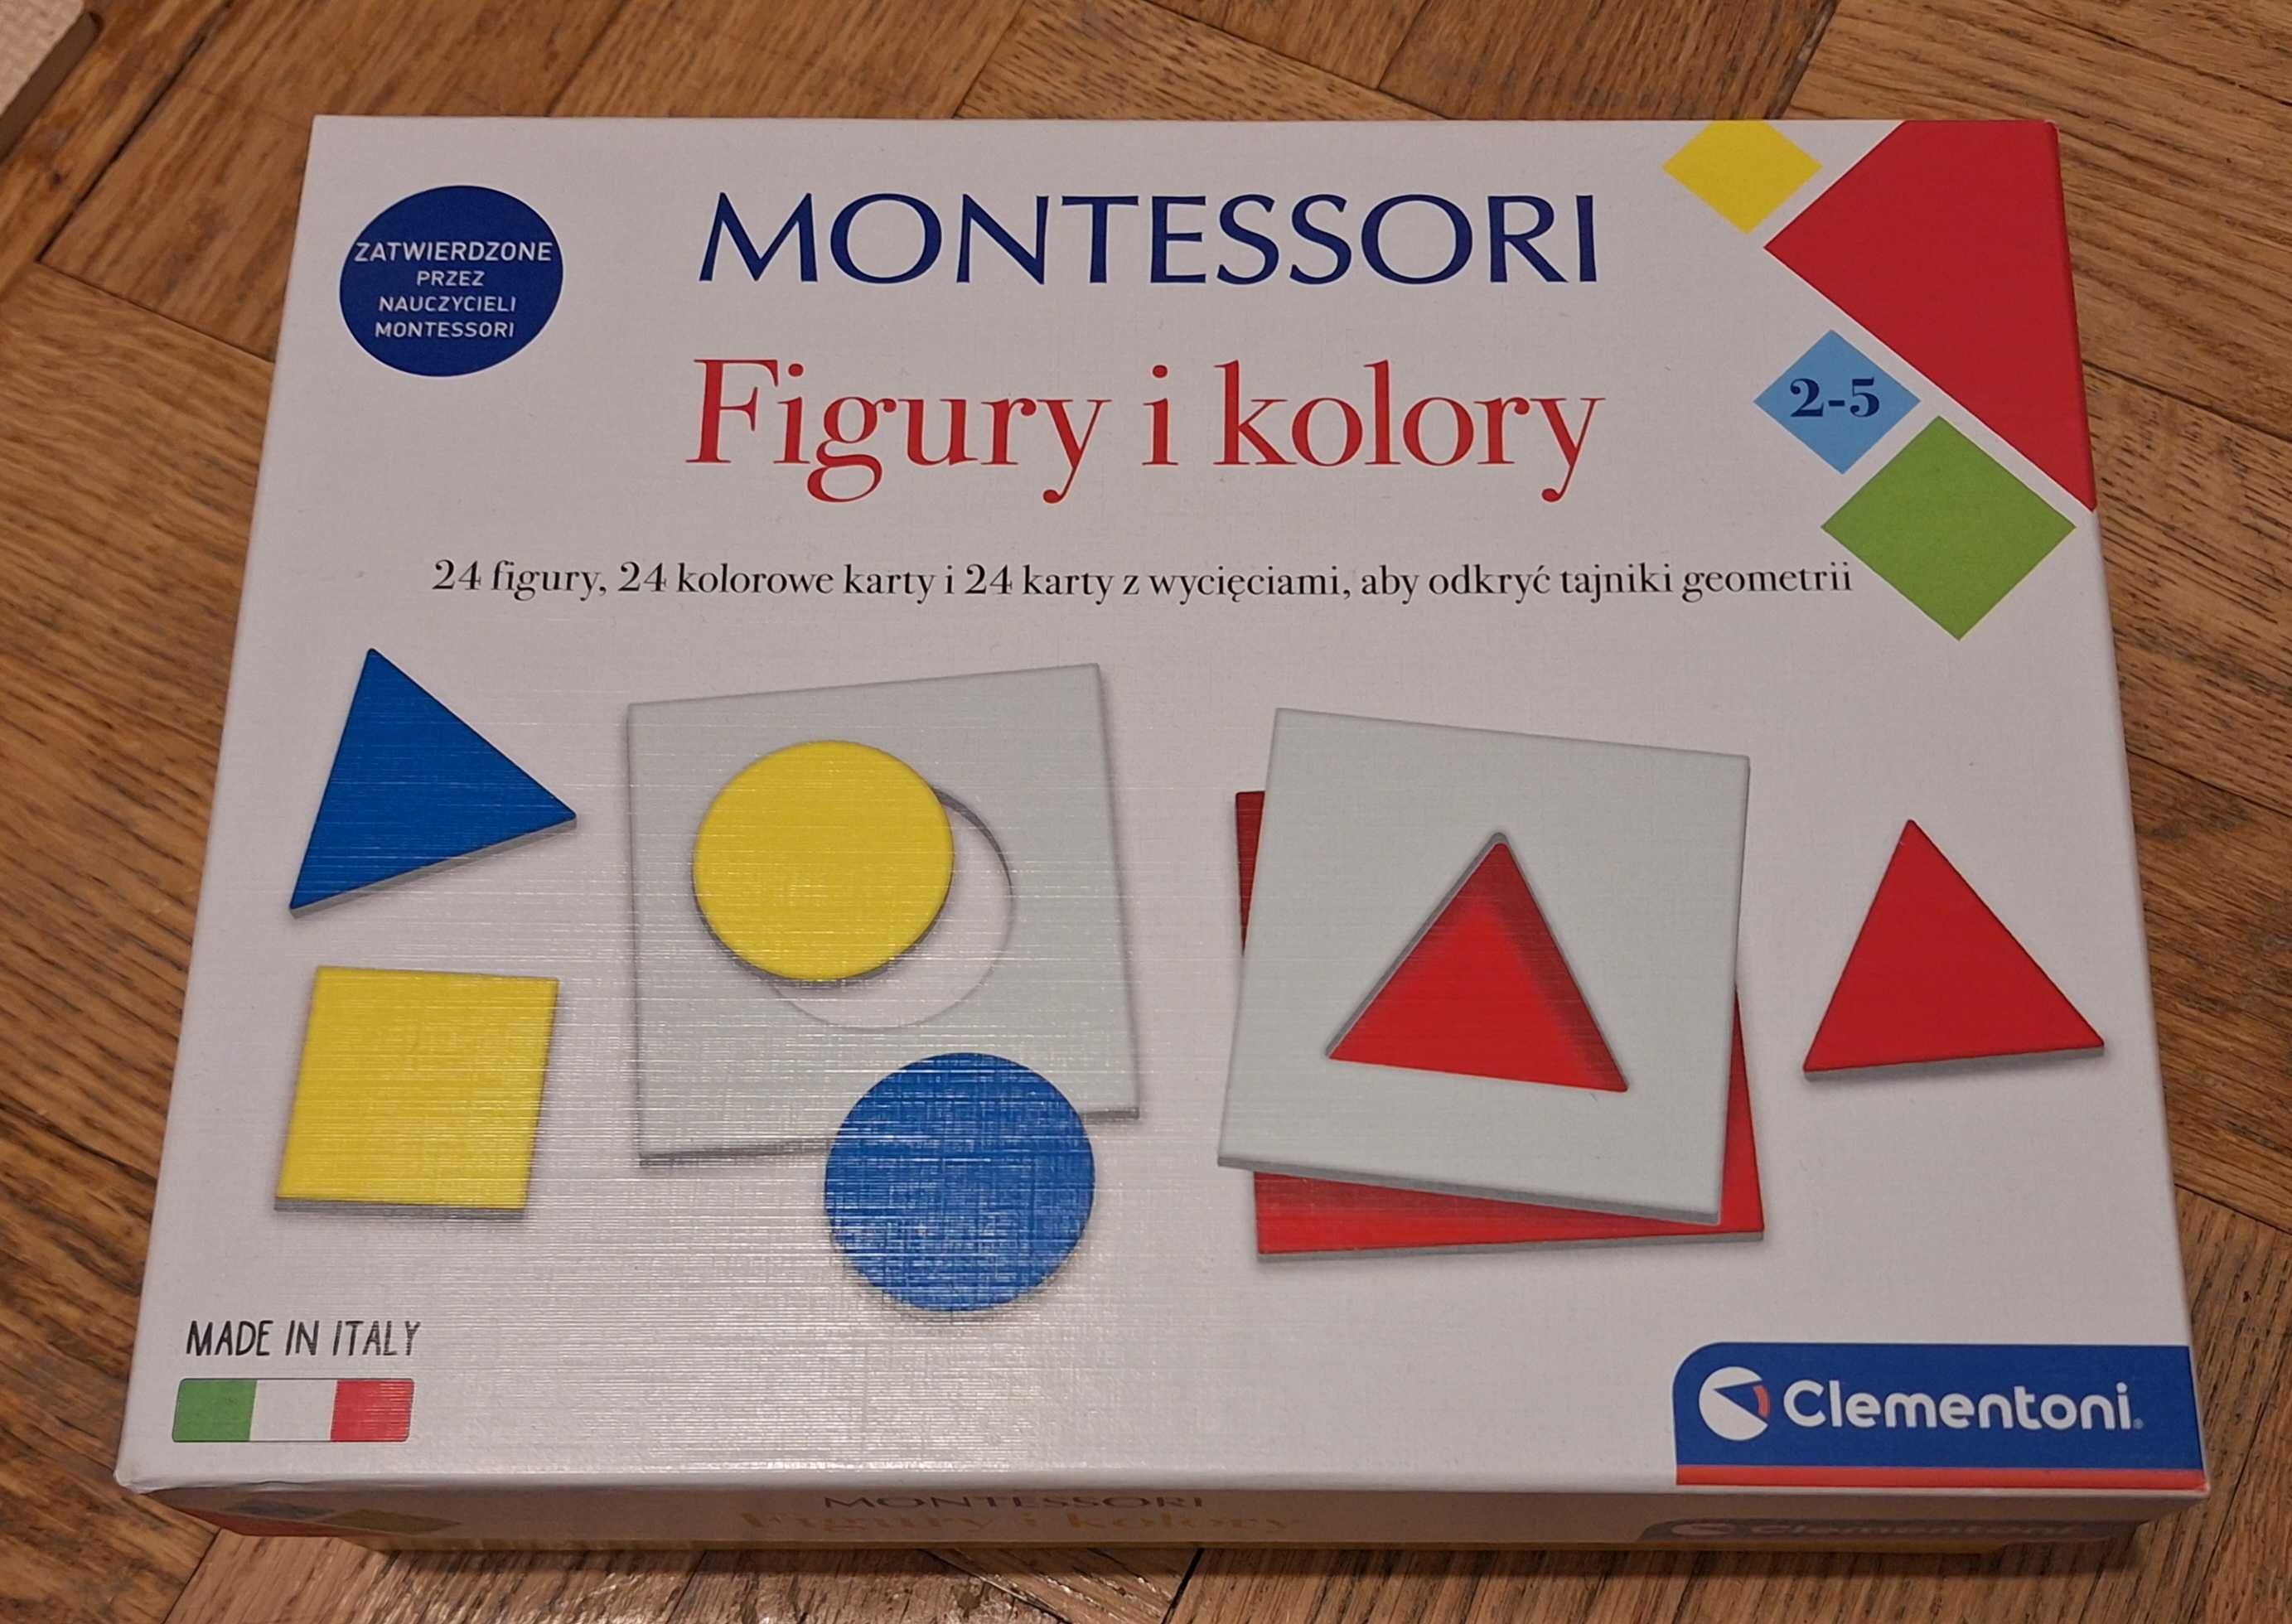 Montessori figury i kolory. Clementoni zabawka gra.